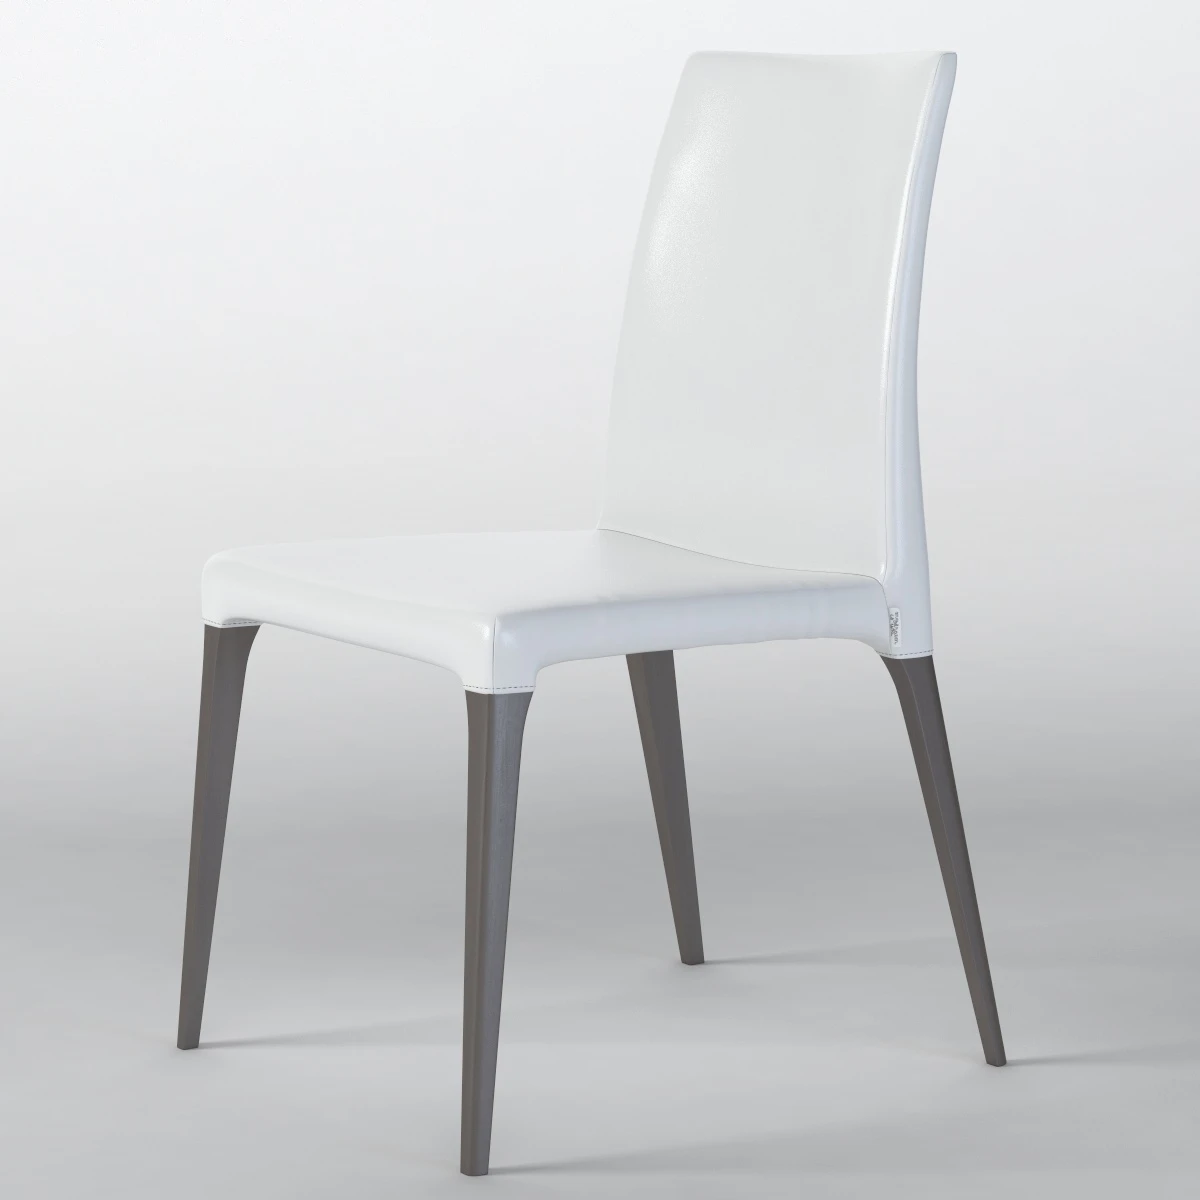 Martinel Eva Pacini And Cappellini Chair 3D Model_01